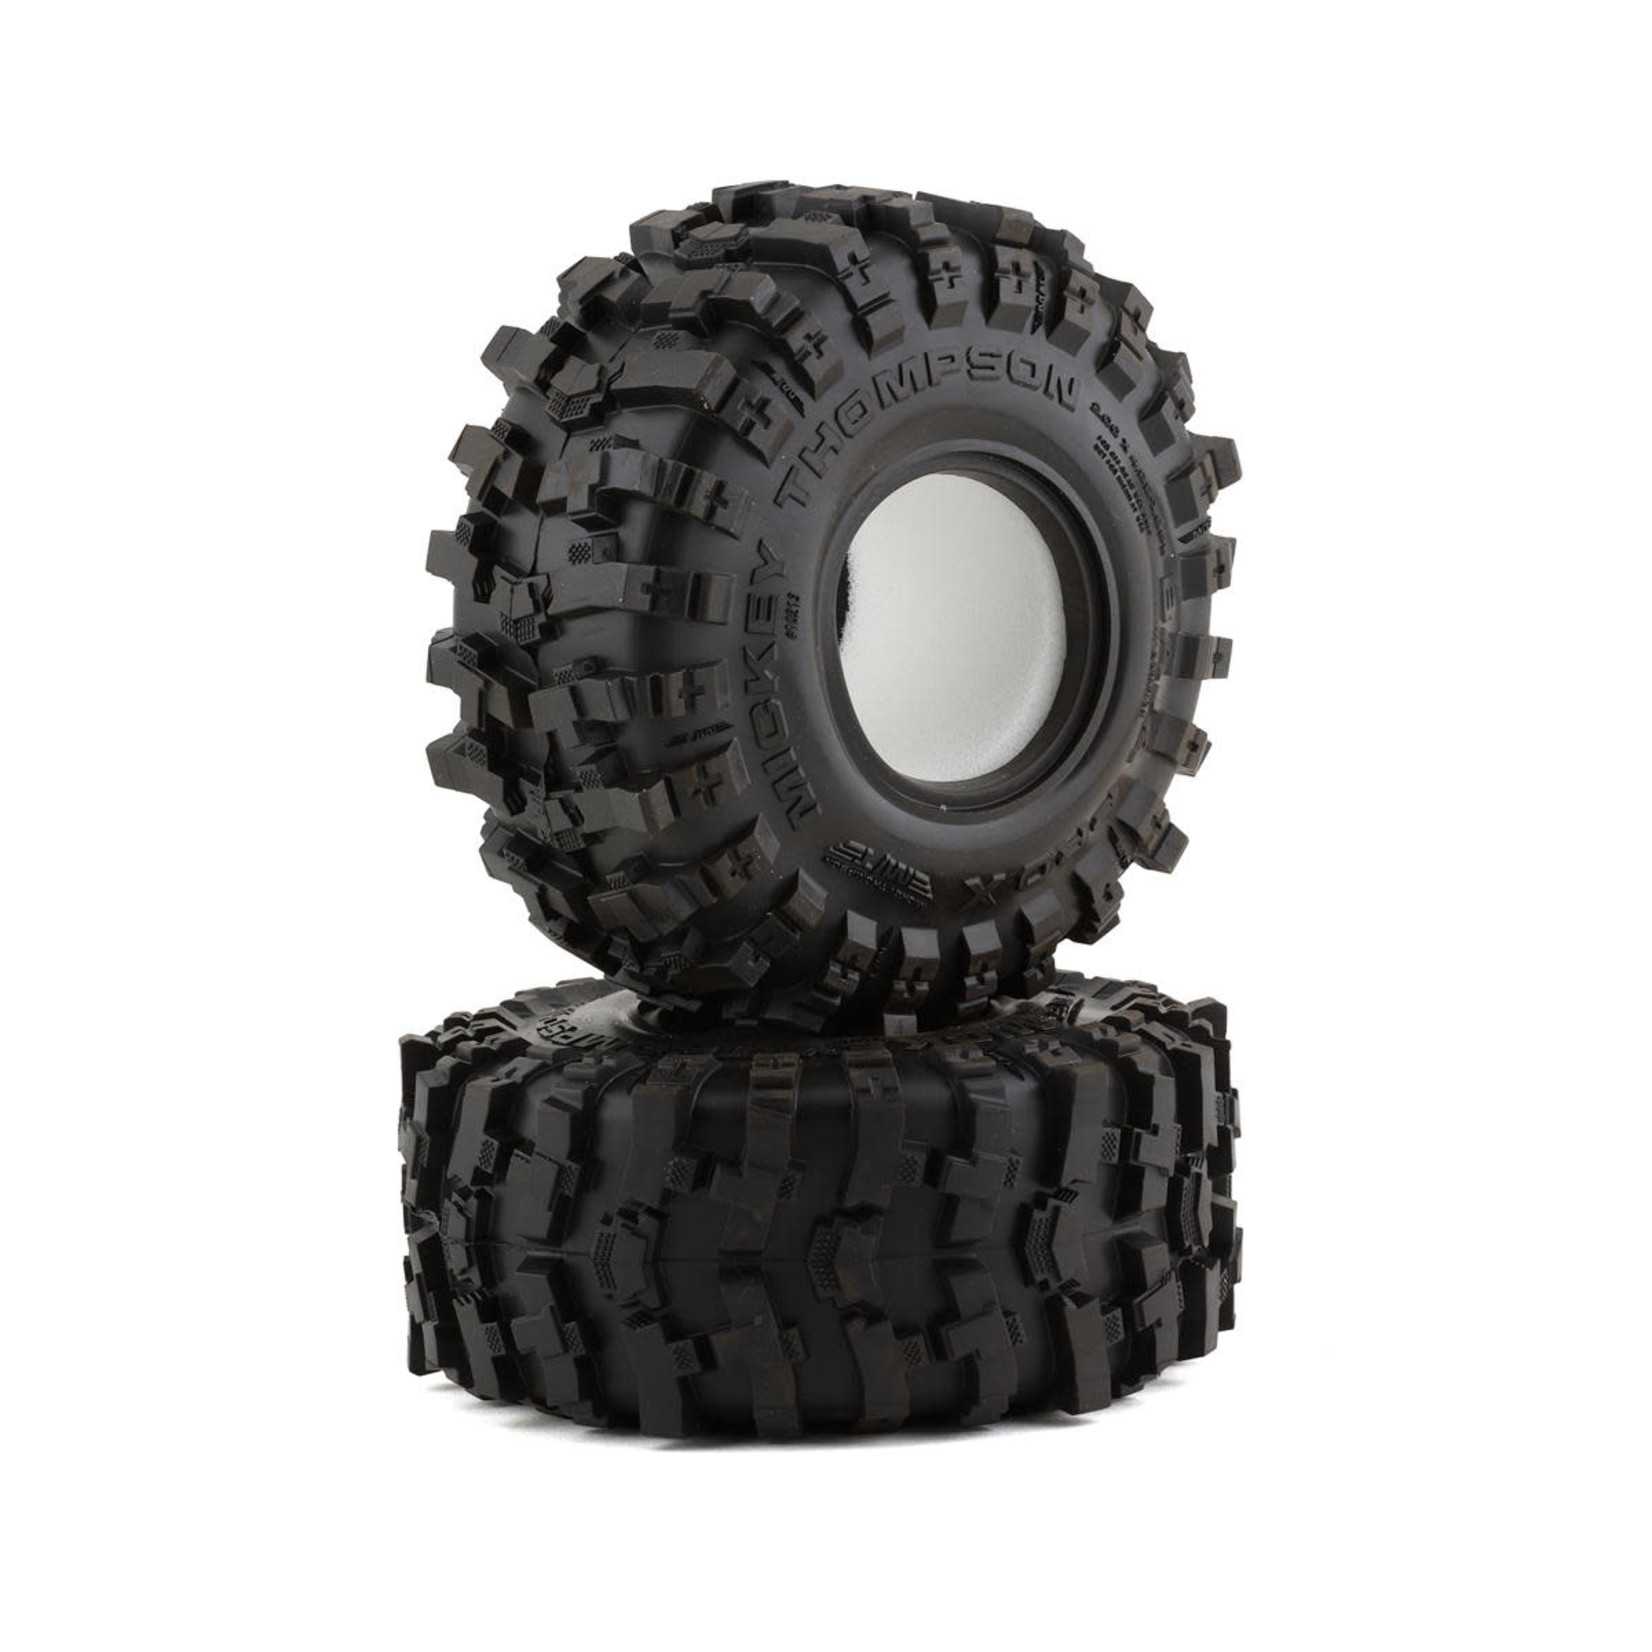 Pro-Line Pro-Line Mickey Thompson Baja Pro X 1.9" Rock Crawler Tires (2) (Predator) w/Memory Foam #10213-03